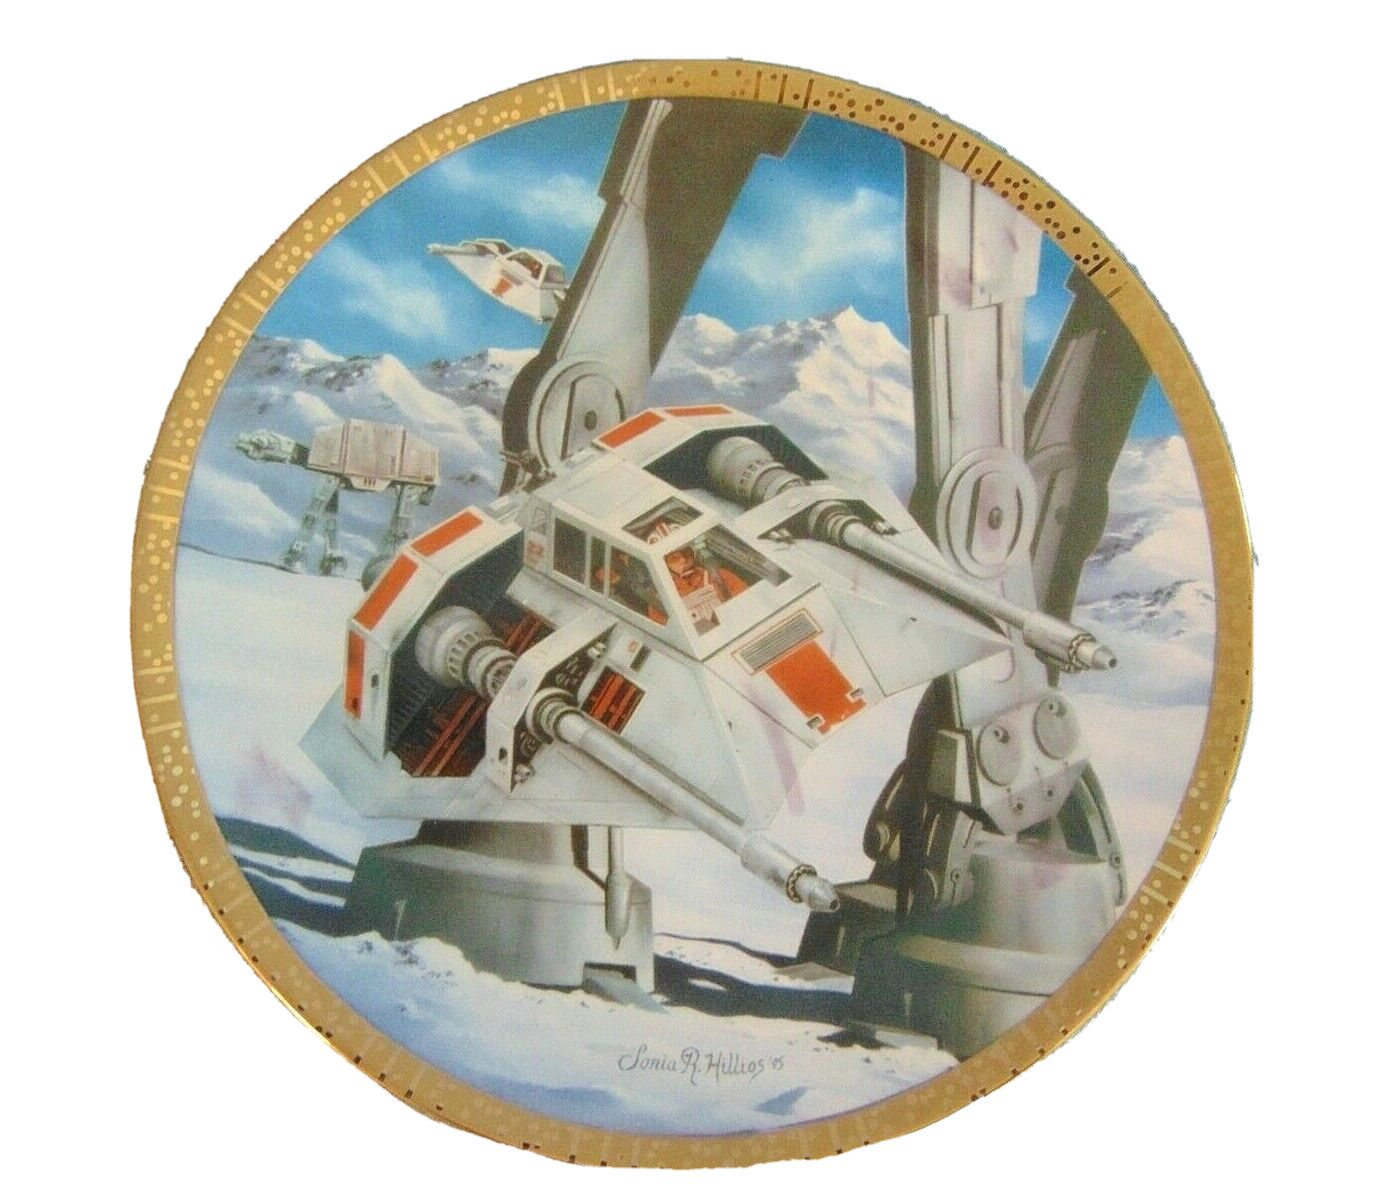 Star Wars Space Vehicles Snowspeeders Hamilton Collection Plate Original 1995